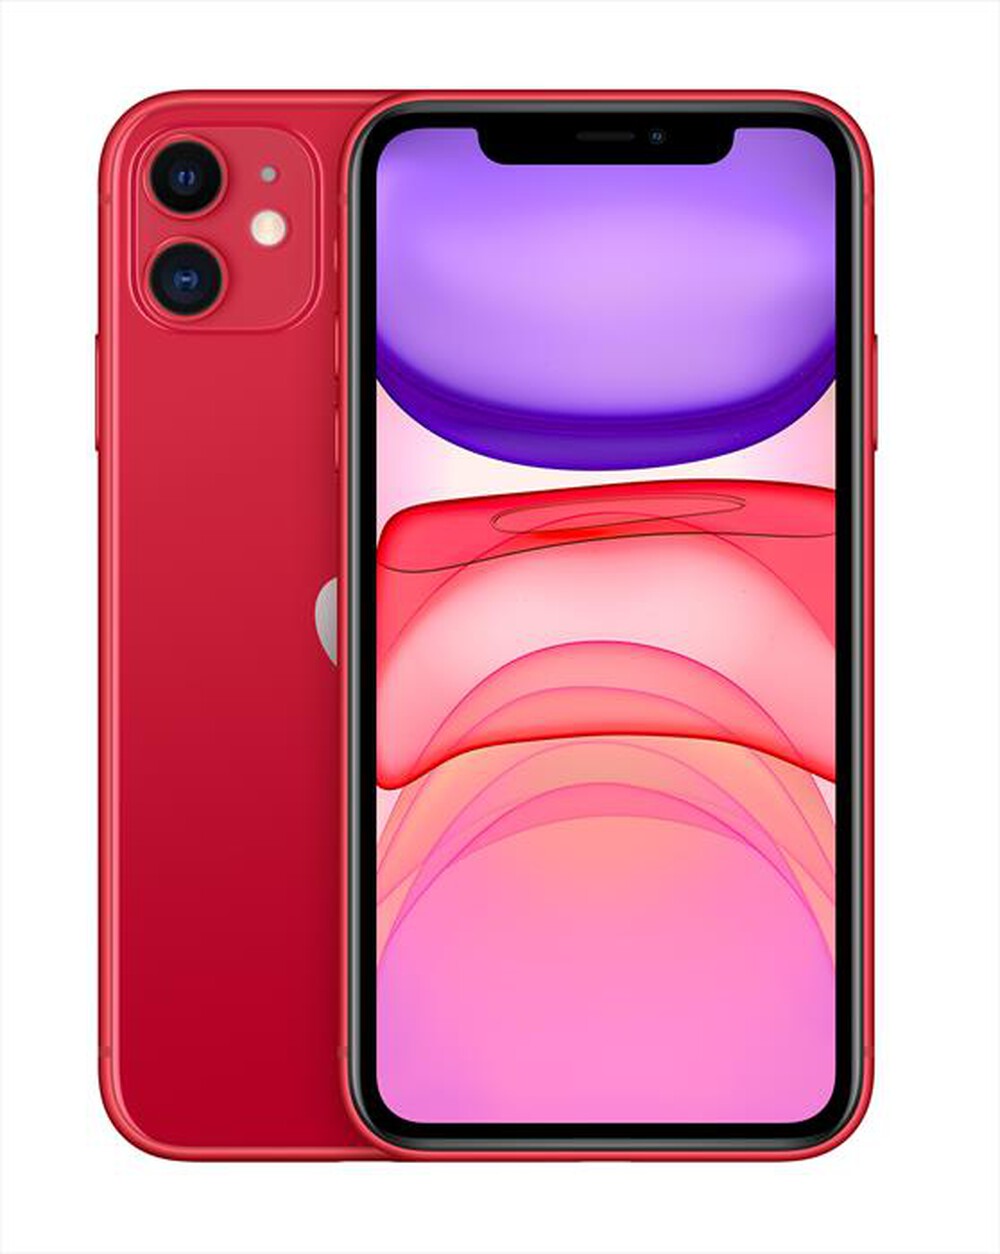 "APPLE - iPhone 11 64GB (Senza accessori)-(PRODUCT)RED"